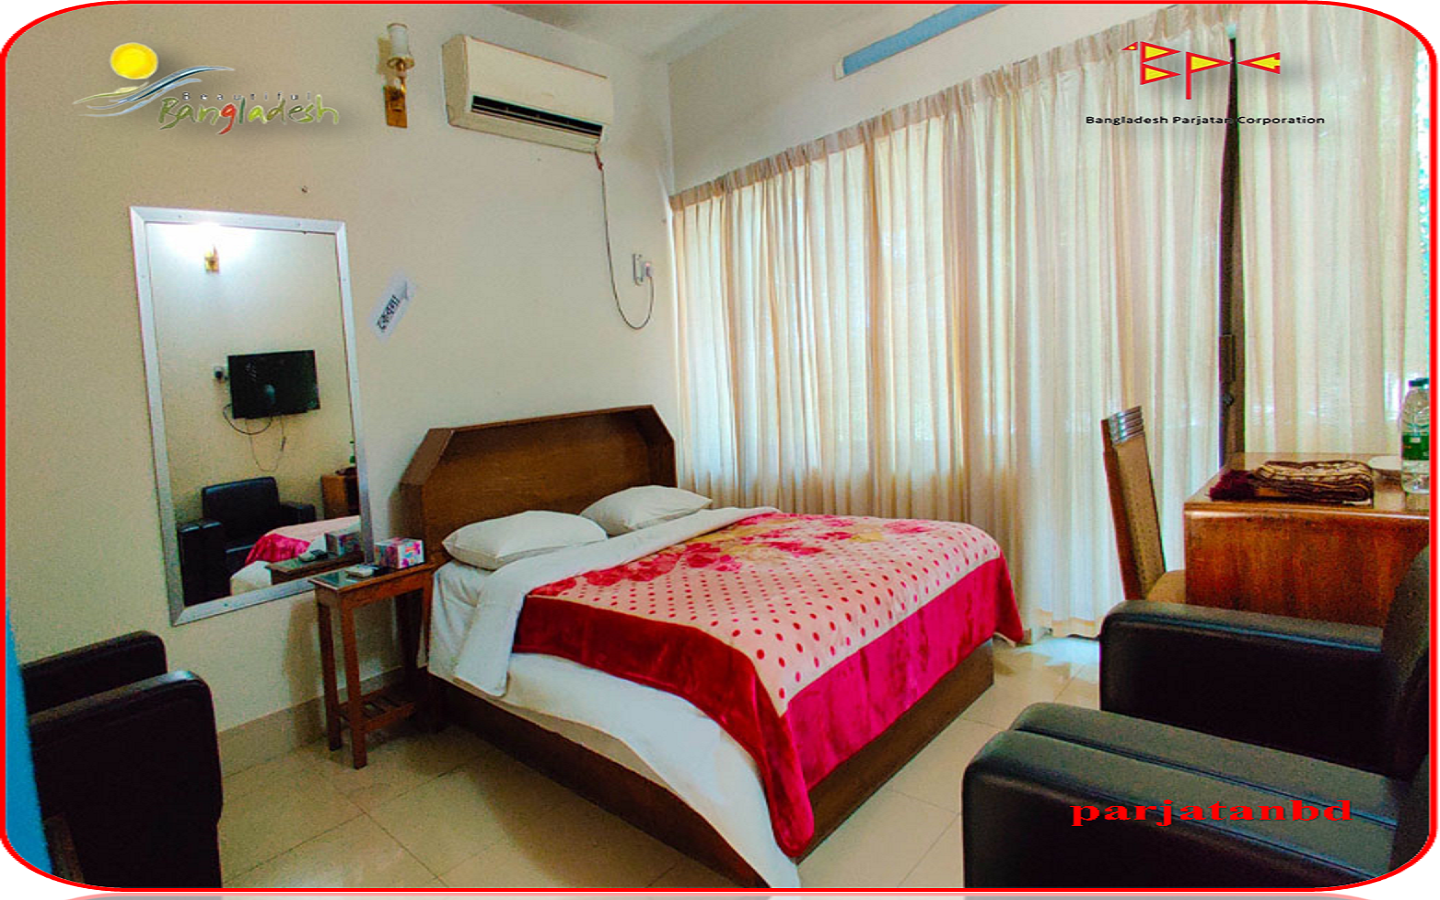 Room AC Suite Room -1, Parjatan Hotel Ne-Taung, Teknaf, Coxs Bazar